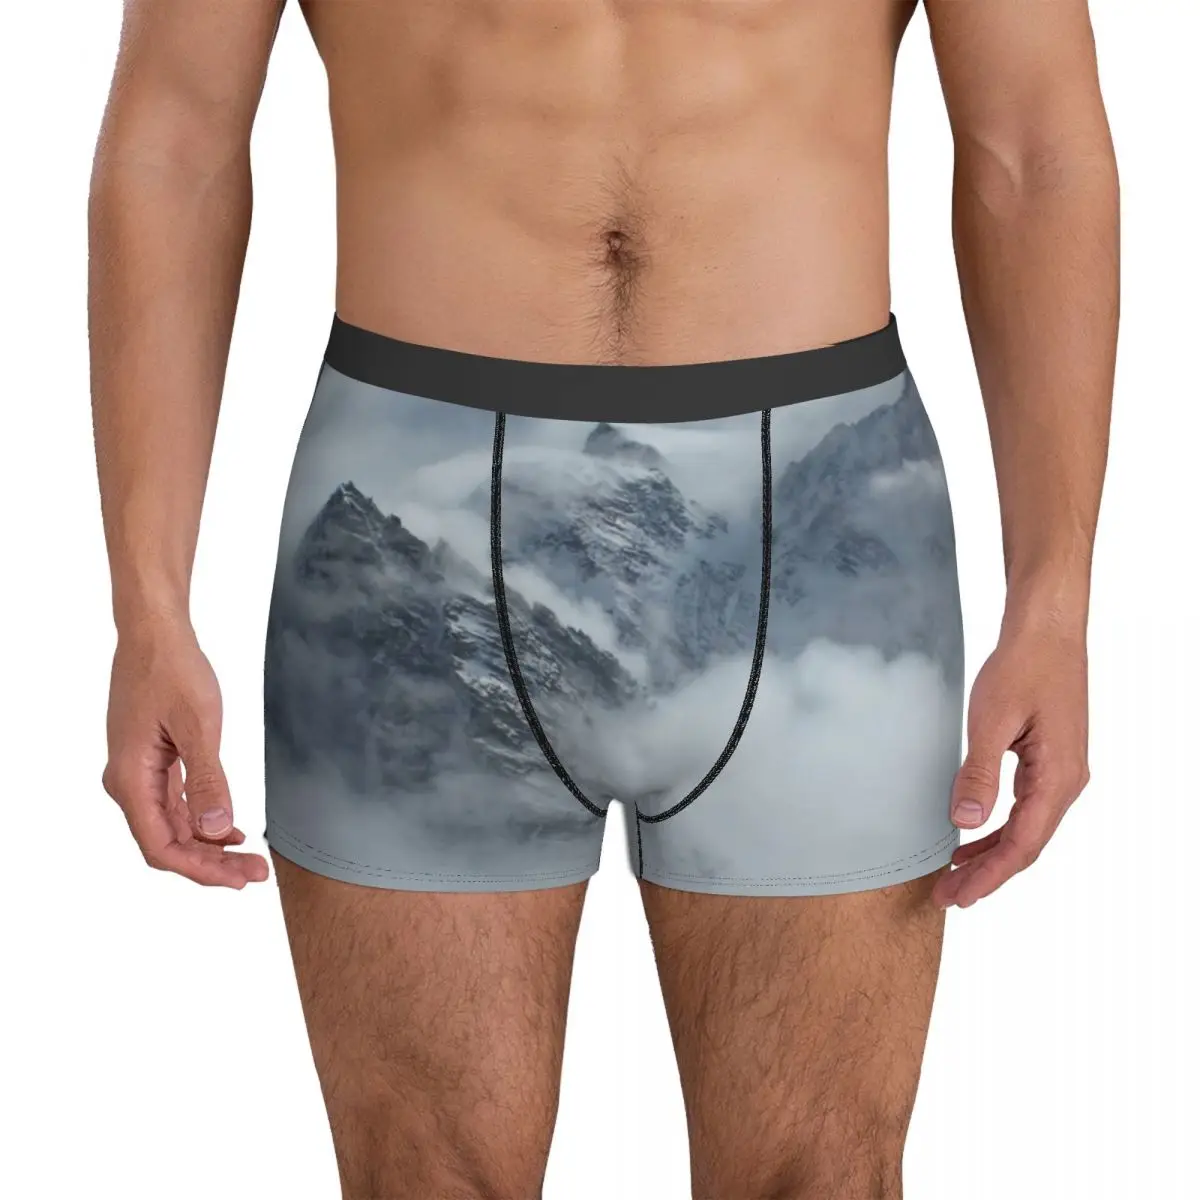 Climbing Shinn Antarctica Underwear Sport Pouch Hot Boxer Shorts Print Boxer Brief Soft Men Panties Big Size